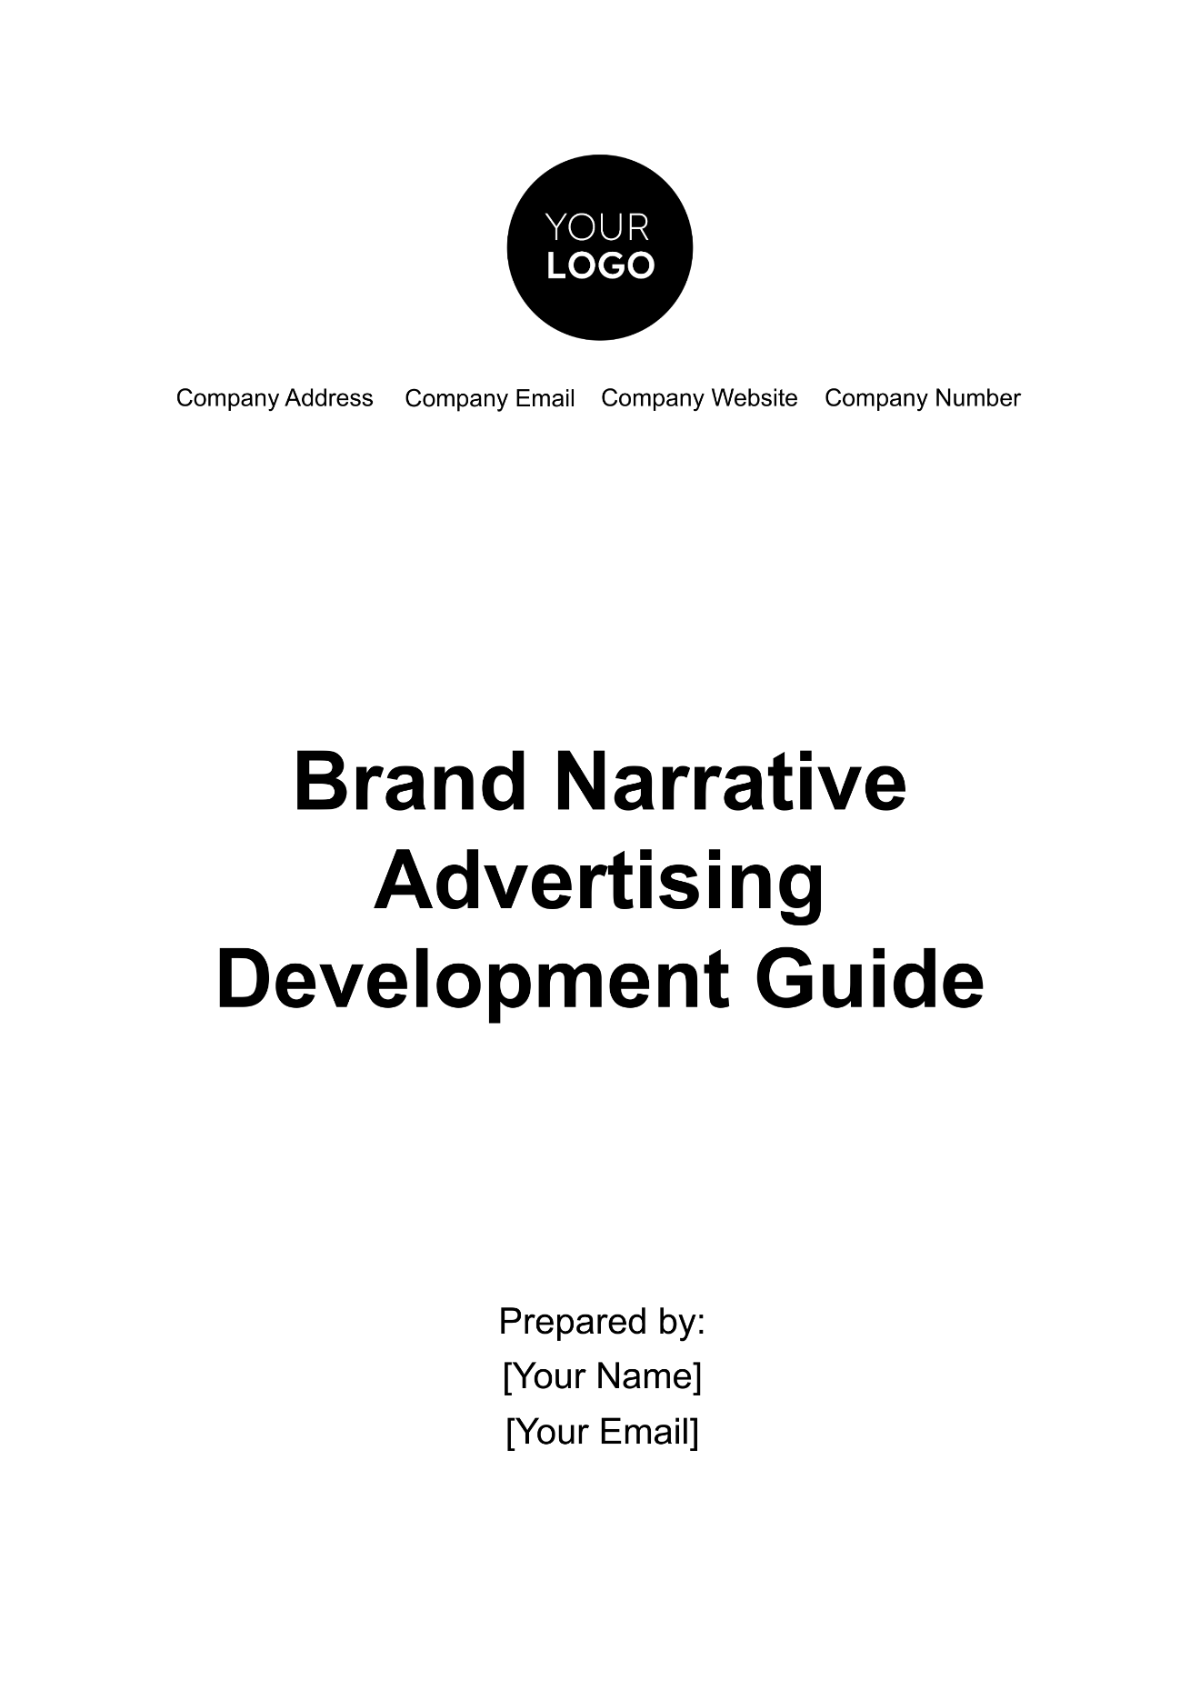 Brand Narrative Advertising Development Guide Template